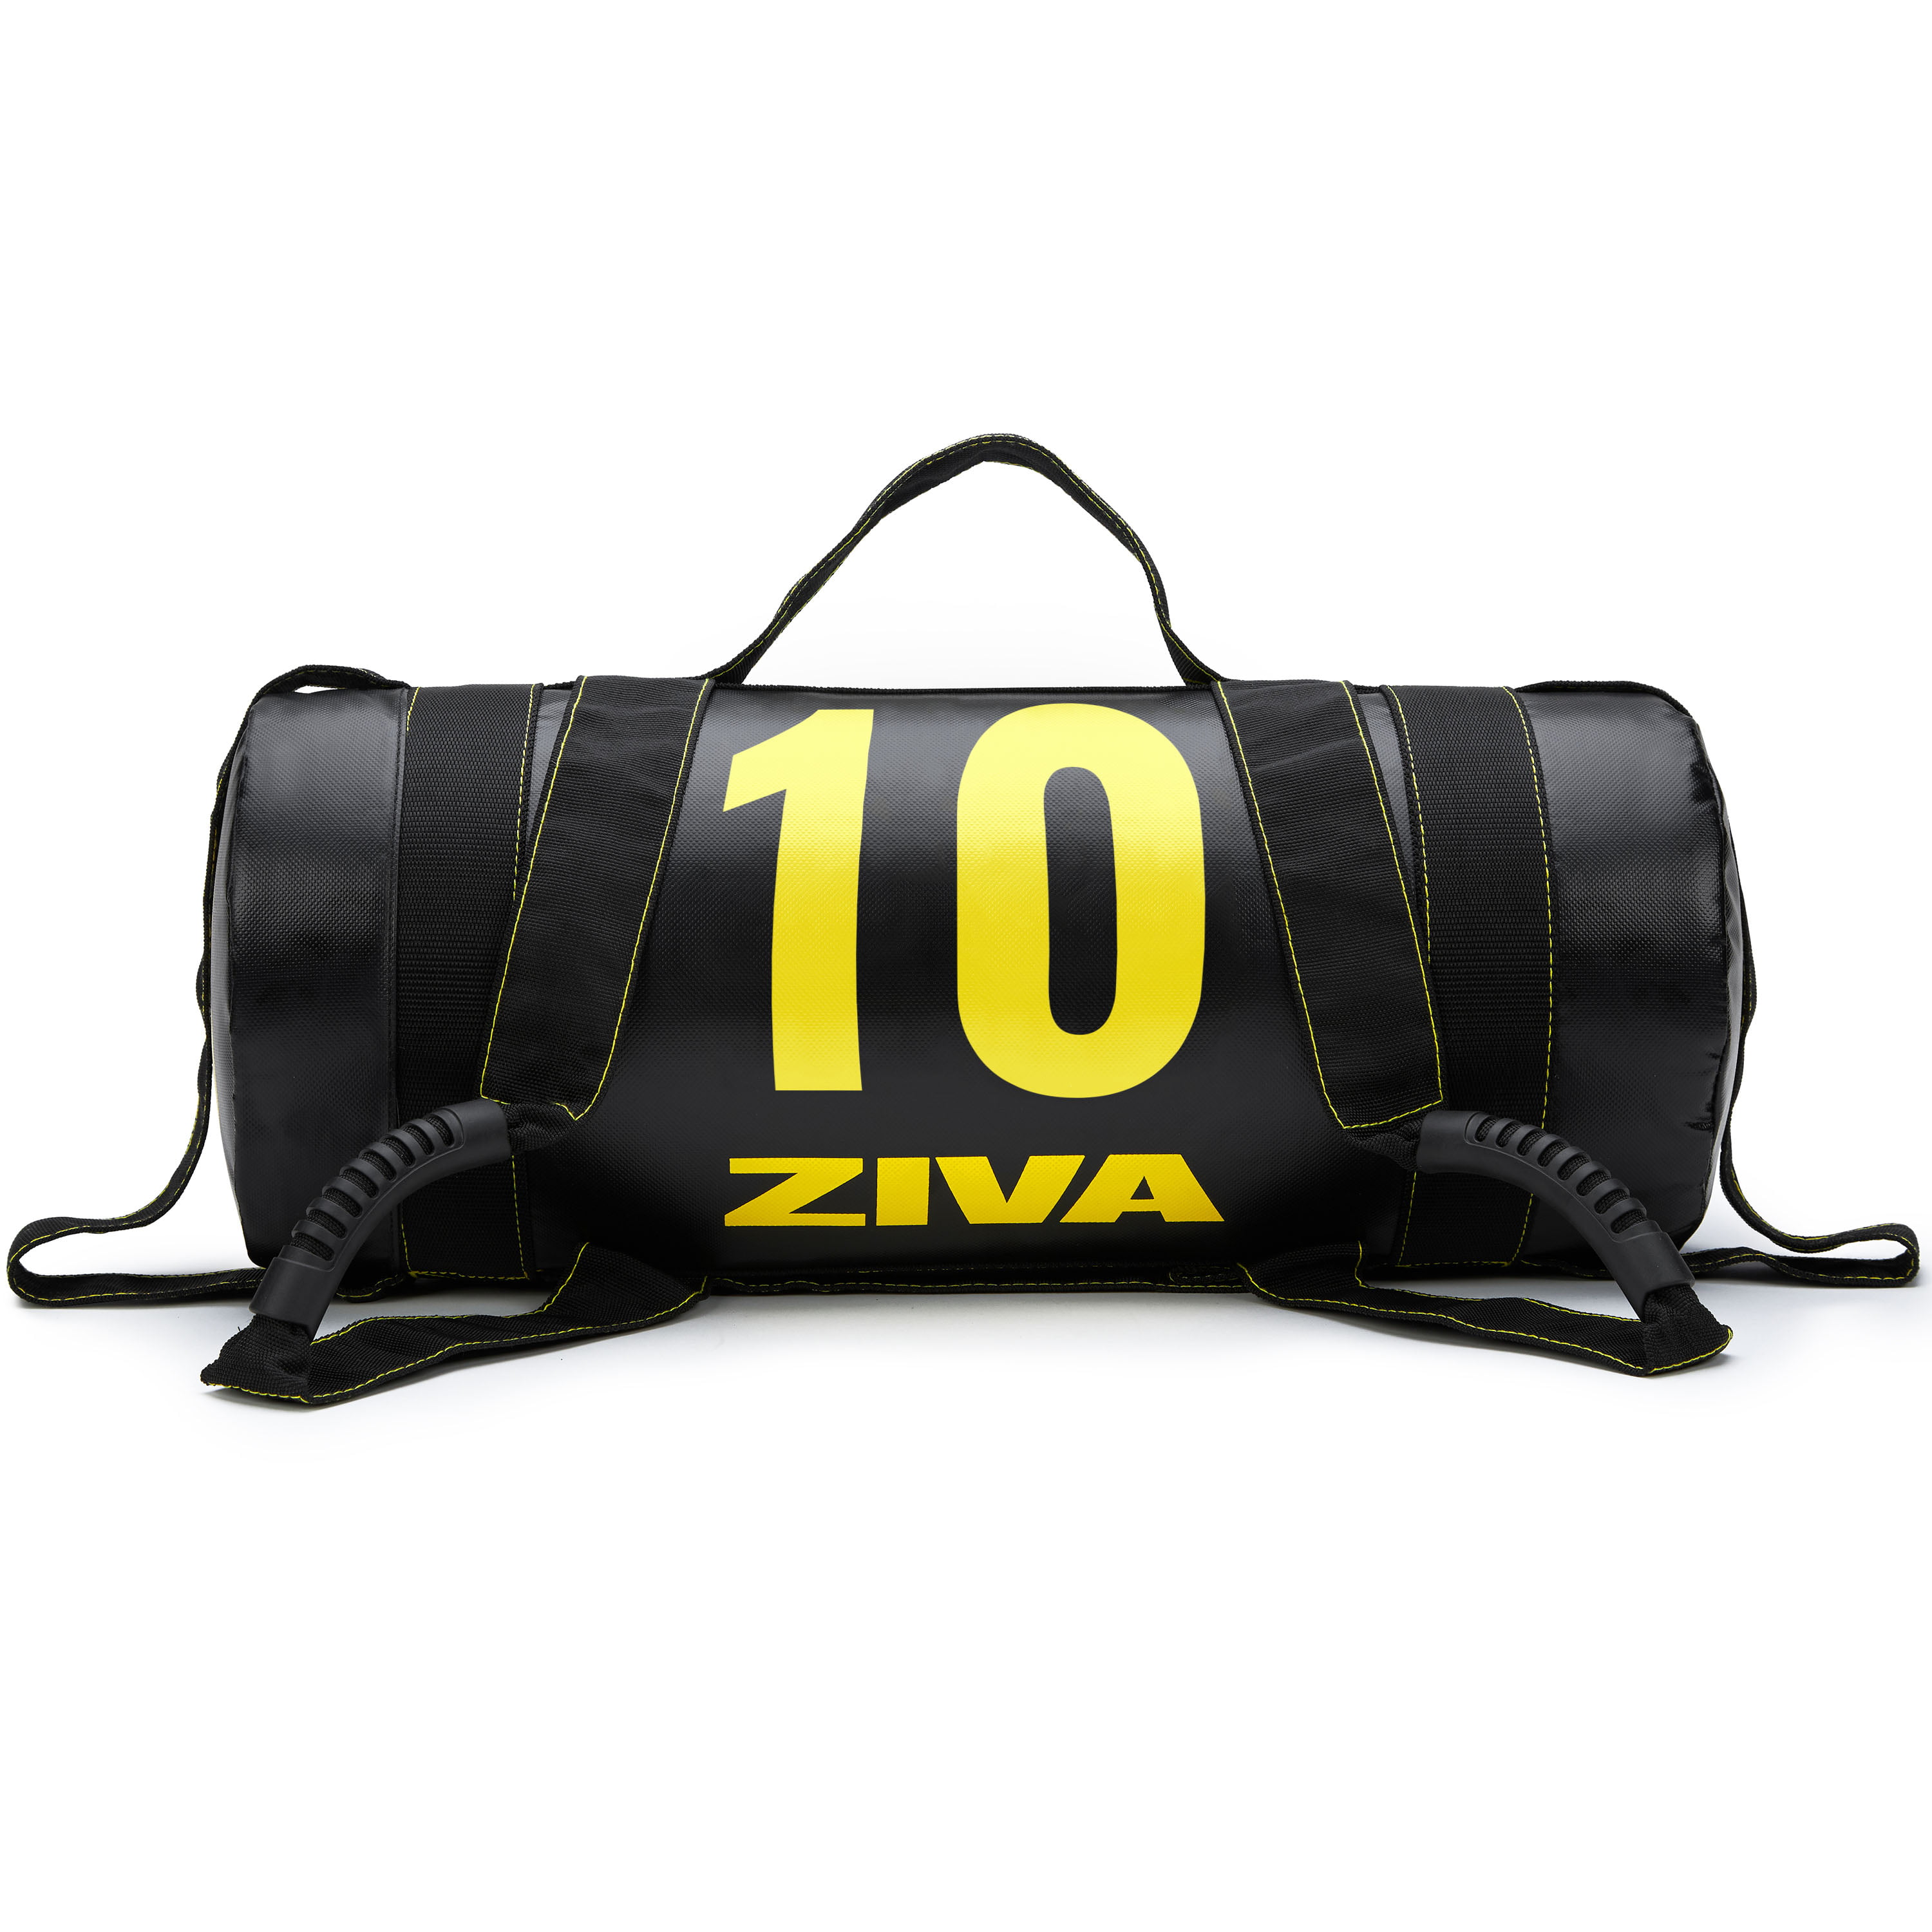 Weighted Sand Bag Strength Adjustable Weight Bag Fitness Sandbag Gym Black 